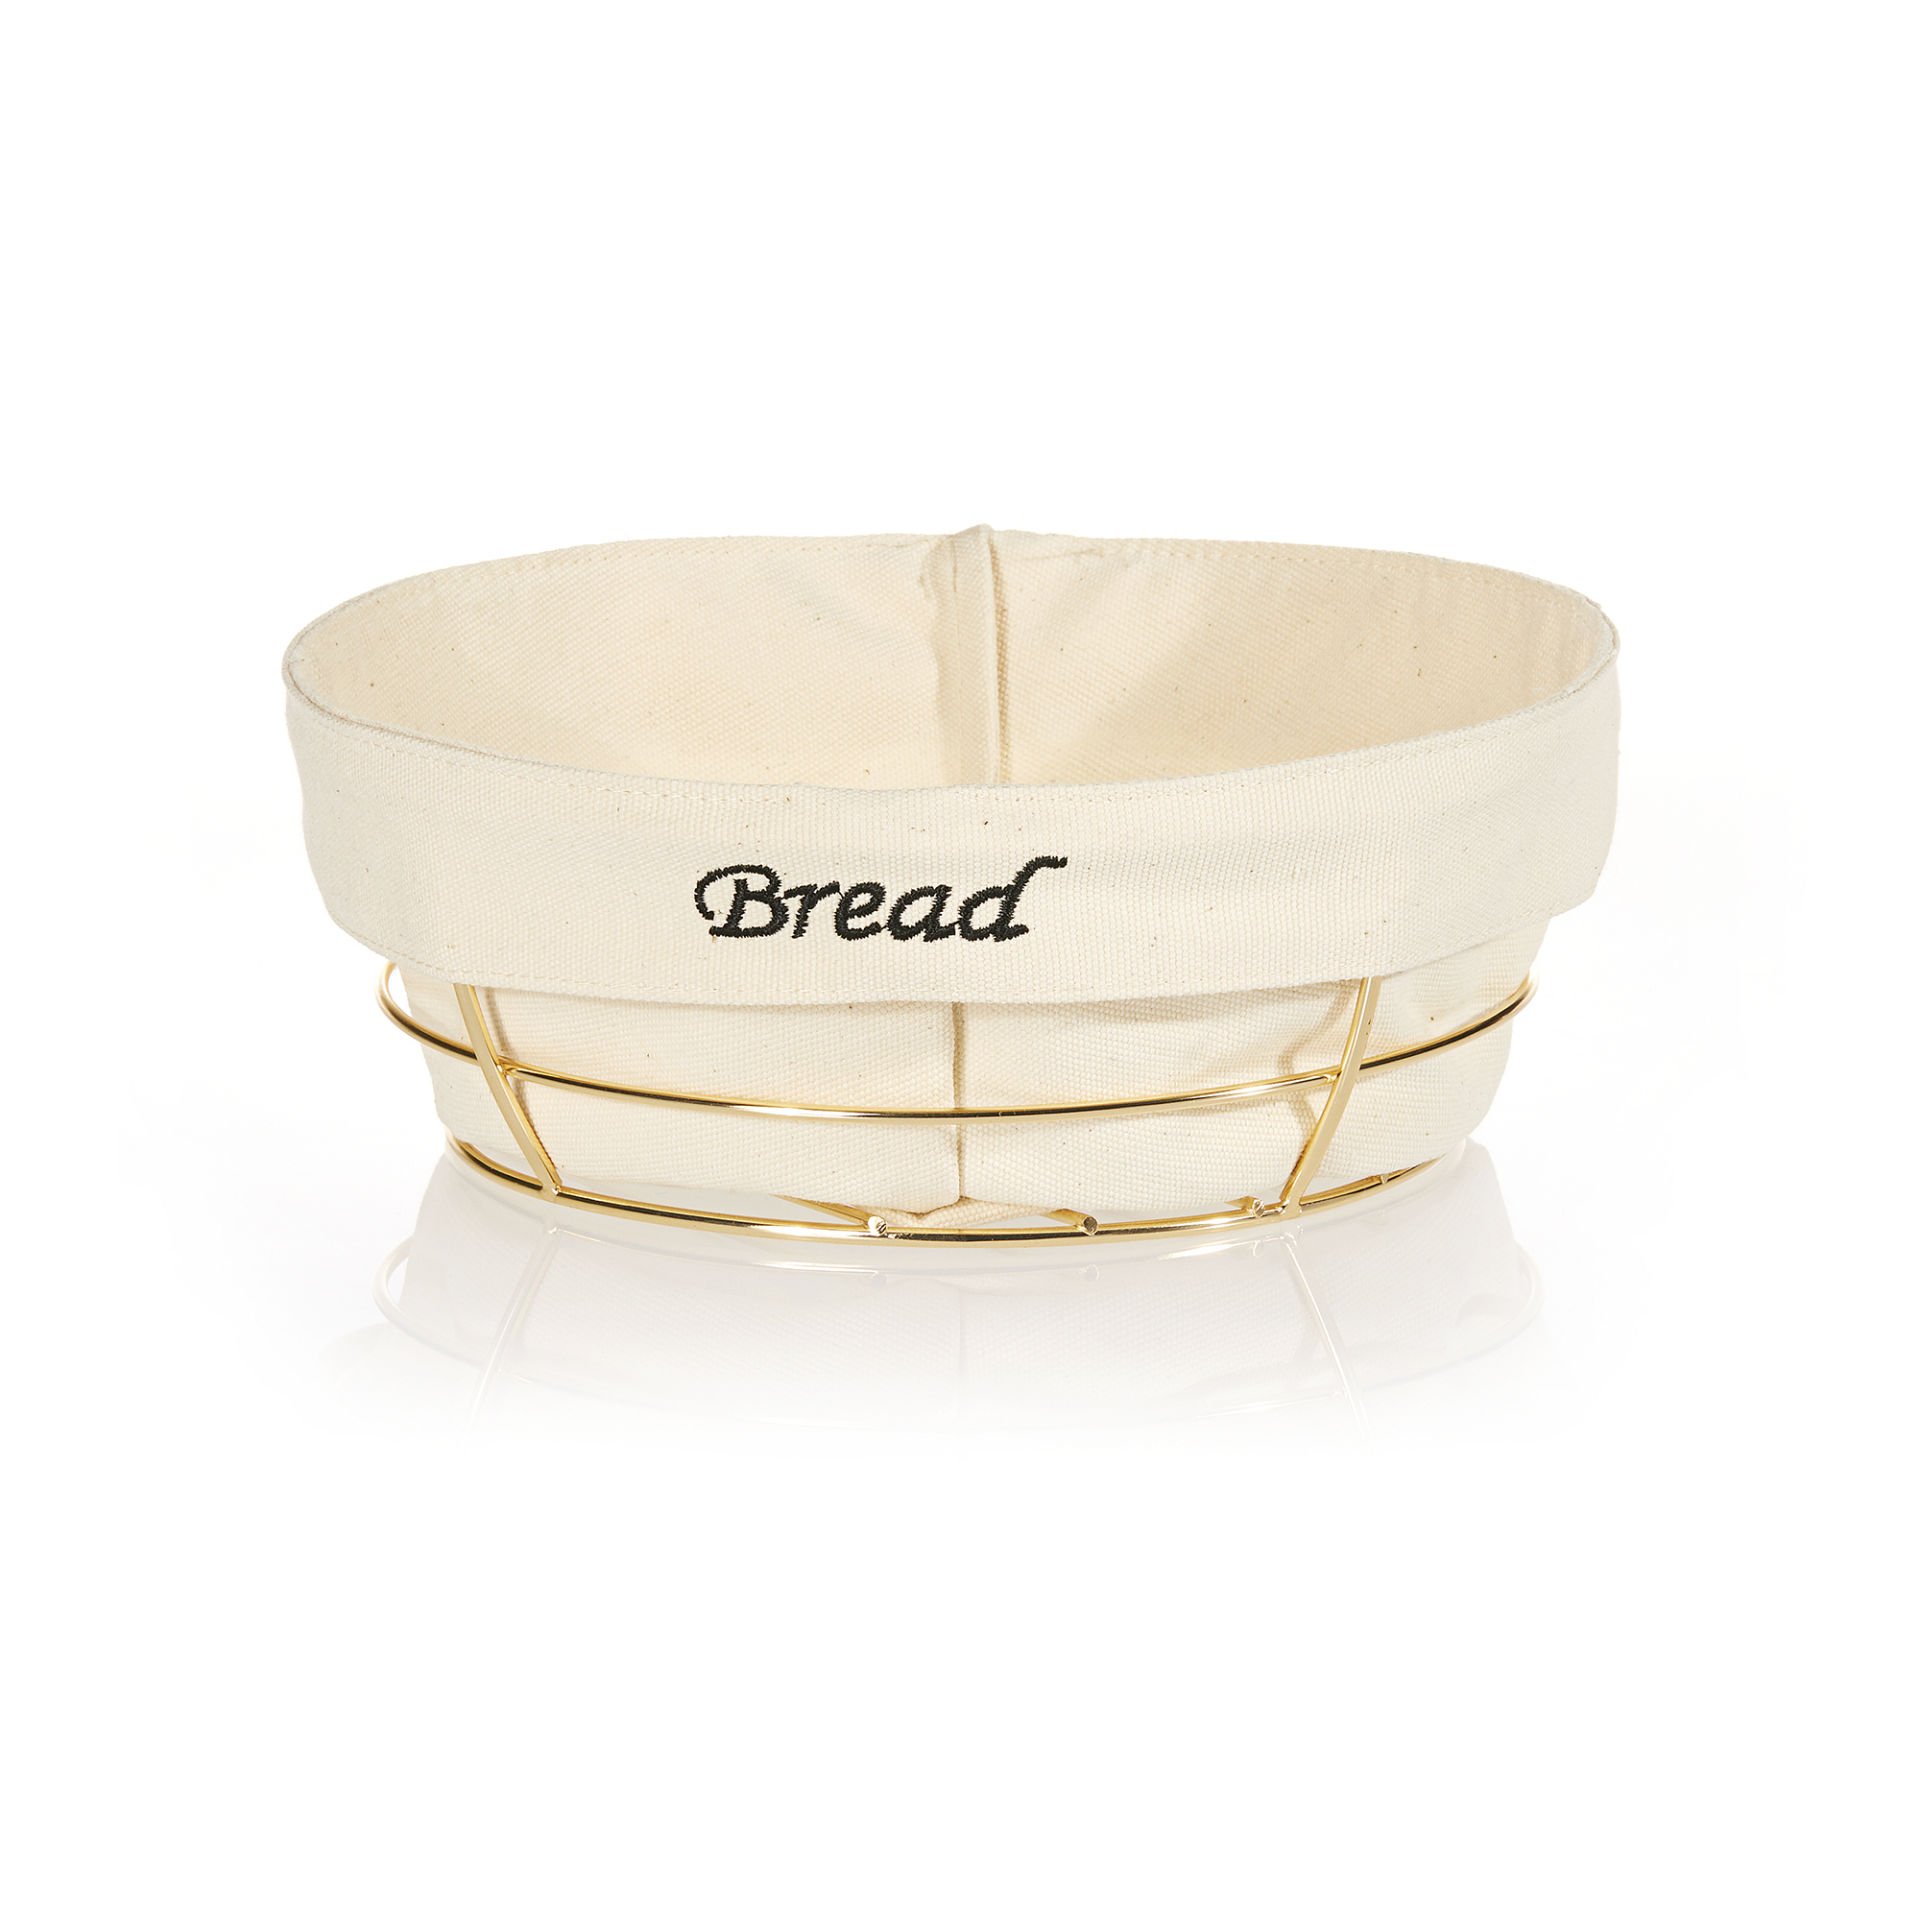 BRD-HW179B-ALTIN Yuvarlak Bezli Ekmek Sepeti (Altın) - 23 x 23 x 8,5 cm